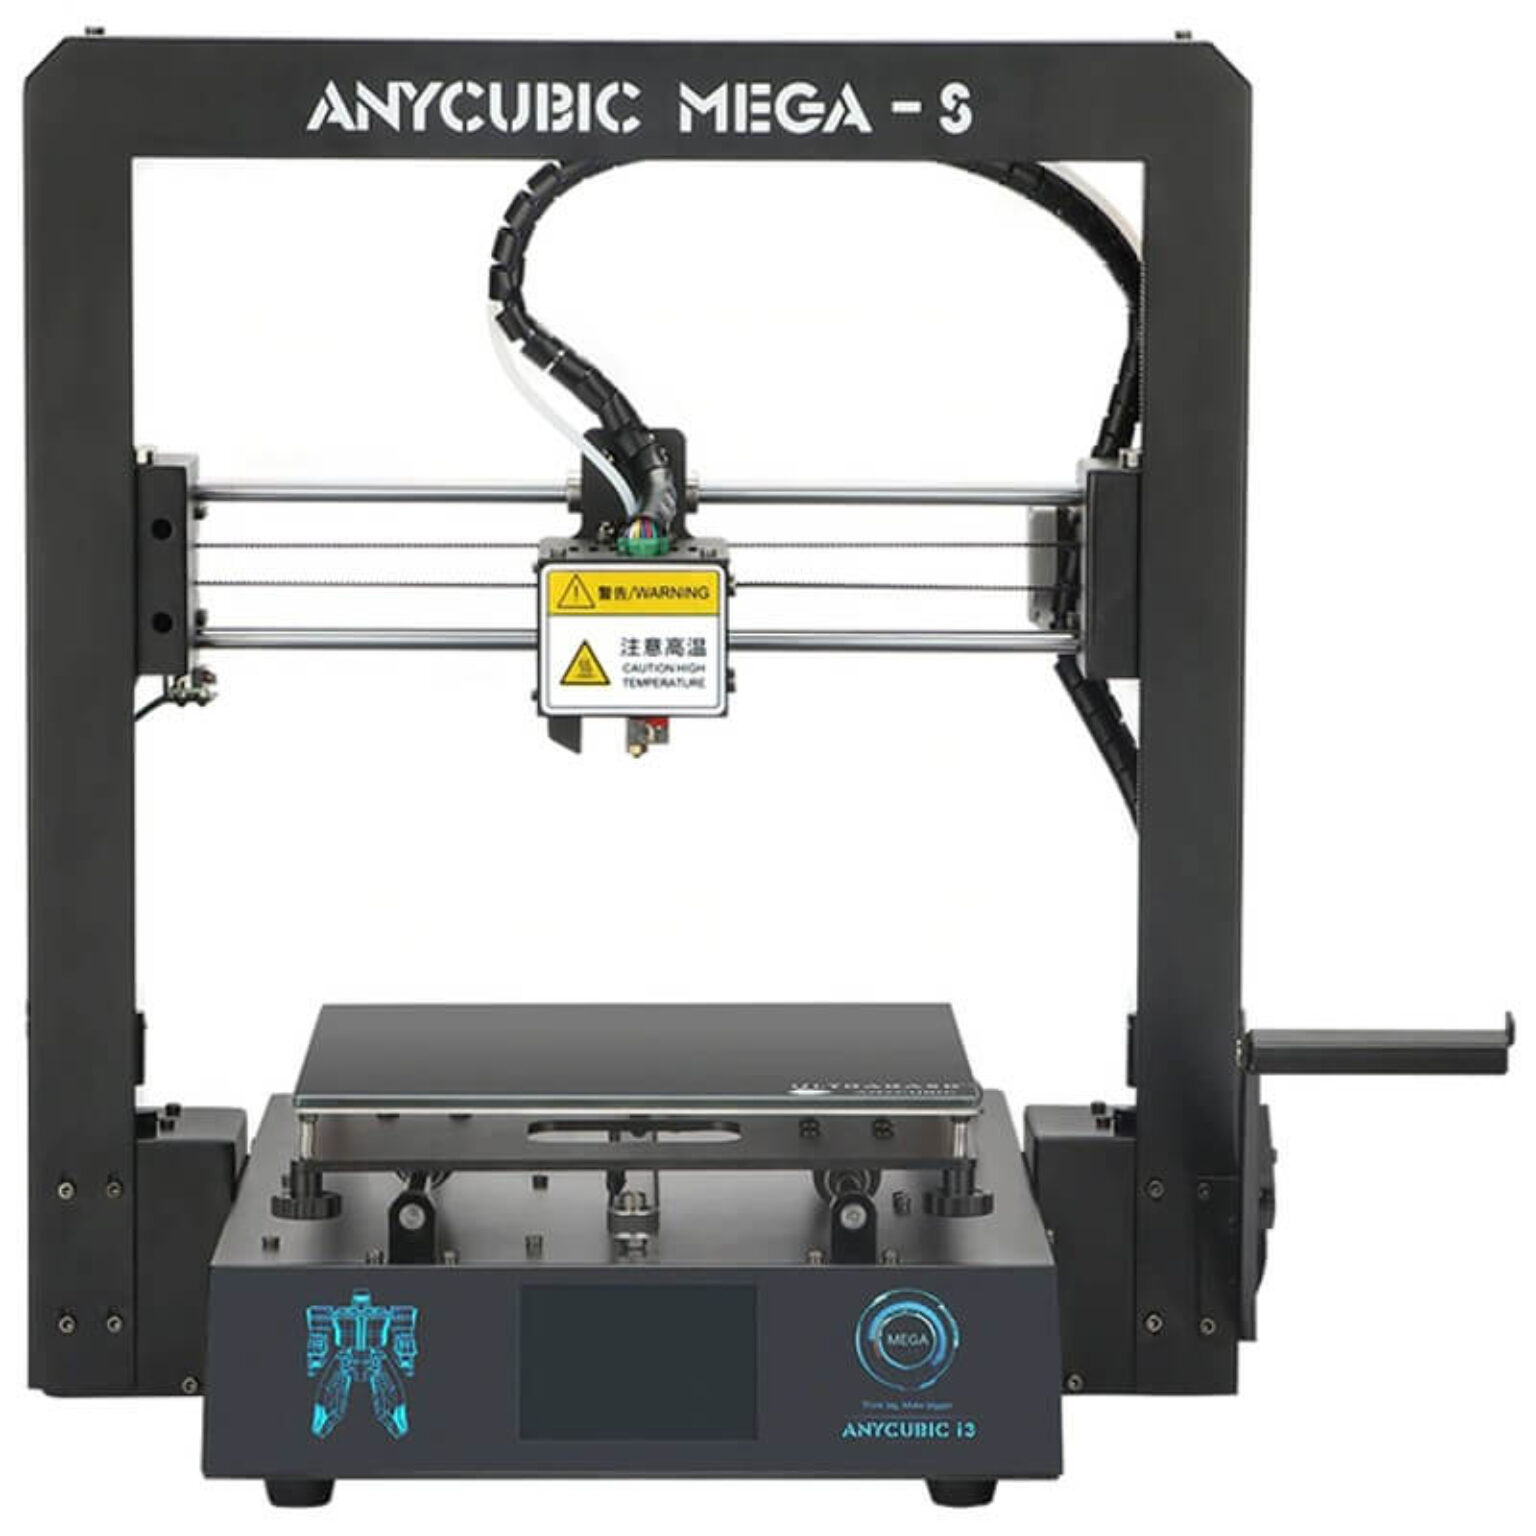 Anycubic Mega S 3D Printer In-Depth Review - Pick 3D Printer